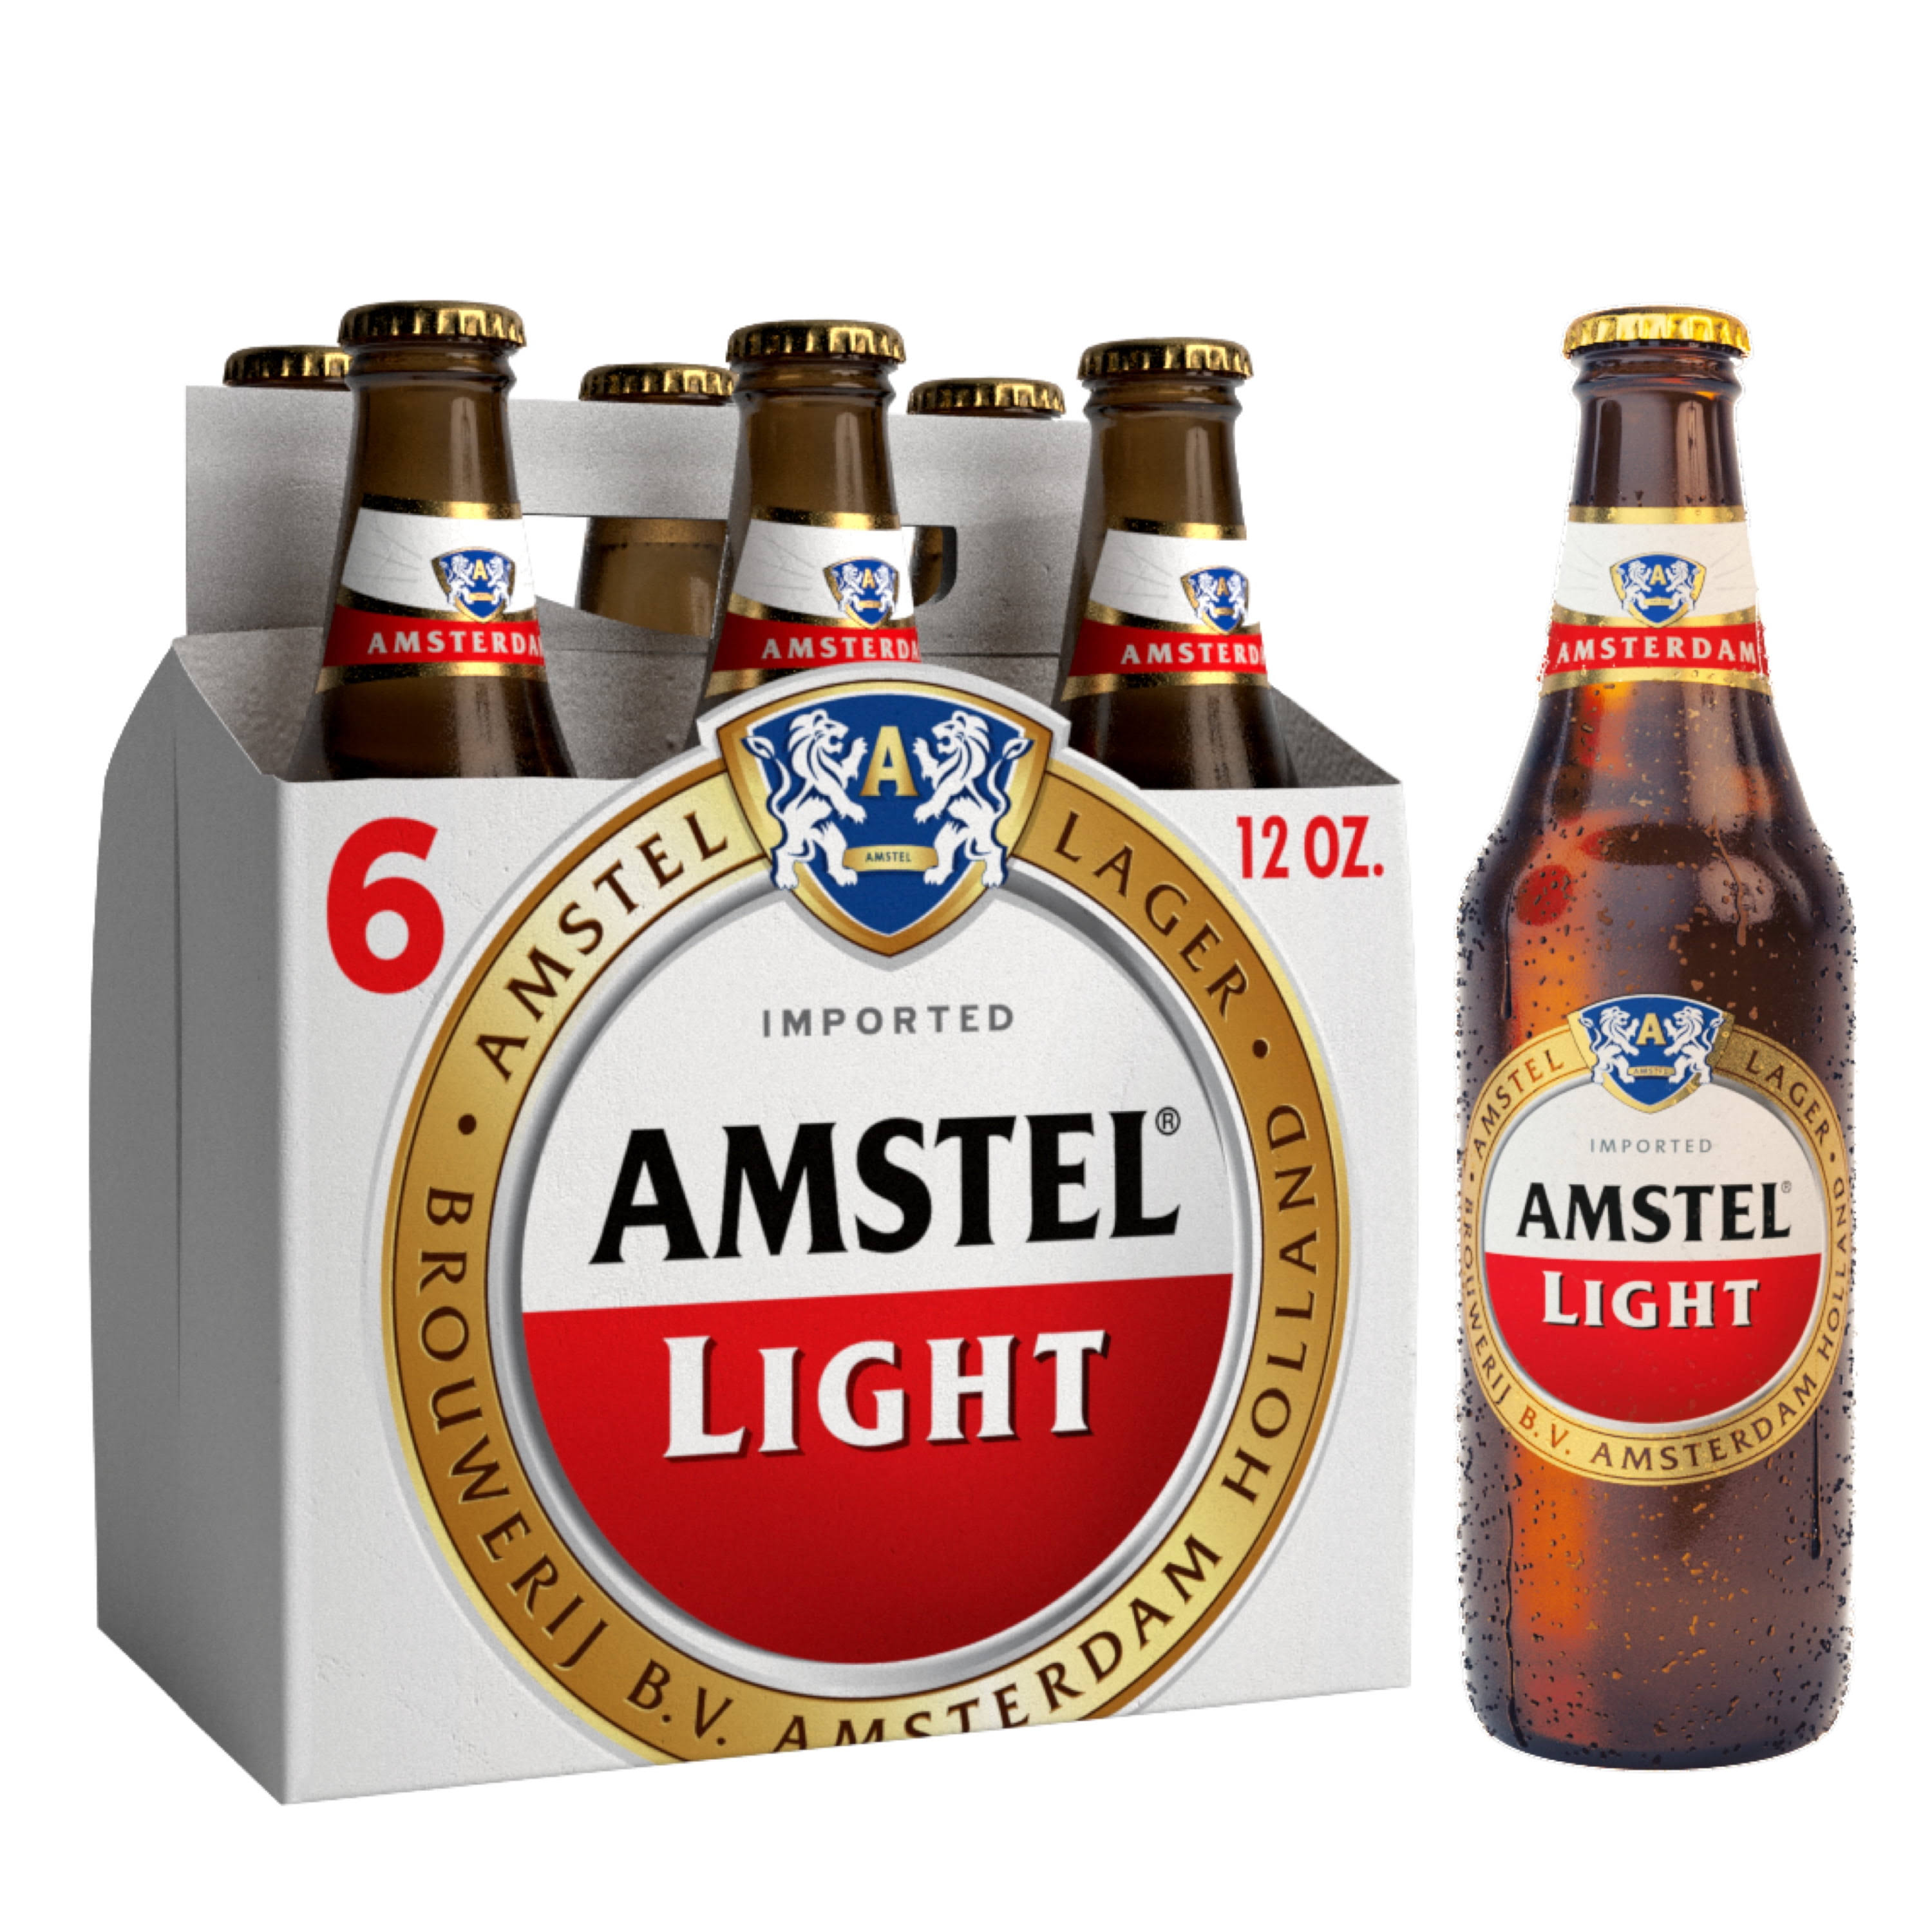 Amstel Light Beer, Lager, 6 Pack - 6 pack, 12 fl oz bottles